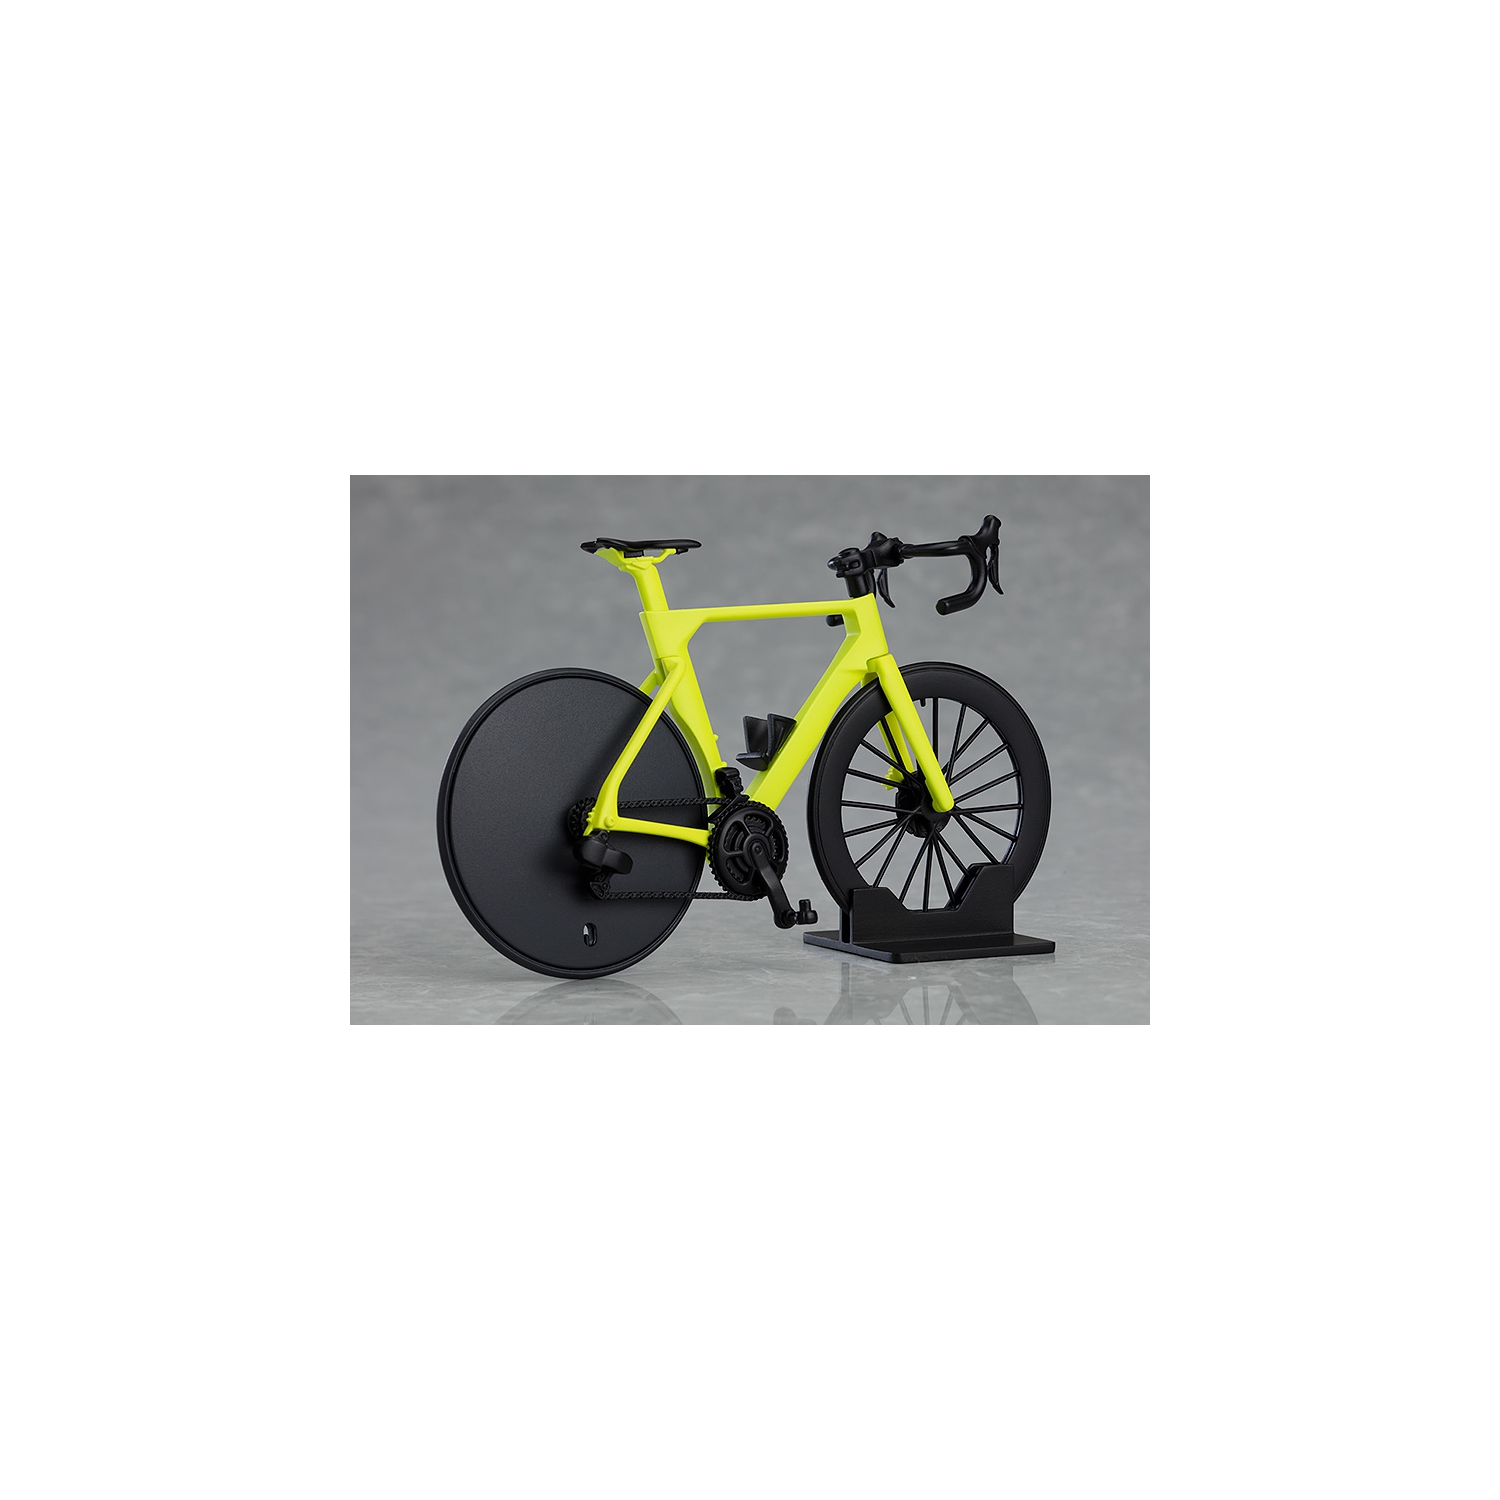 PLAMAX figma Road Bike (Lime Green) 1/12 Scale Model Kit